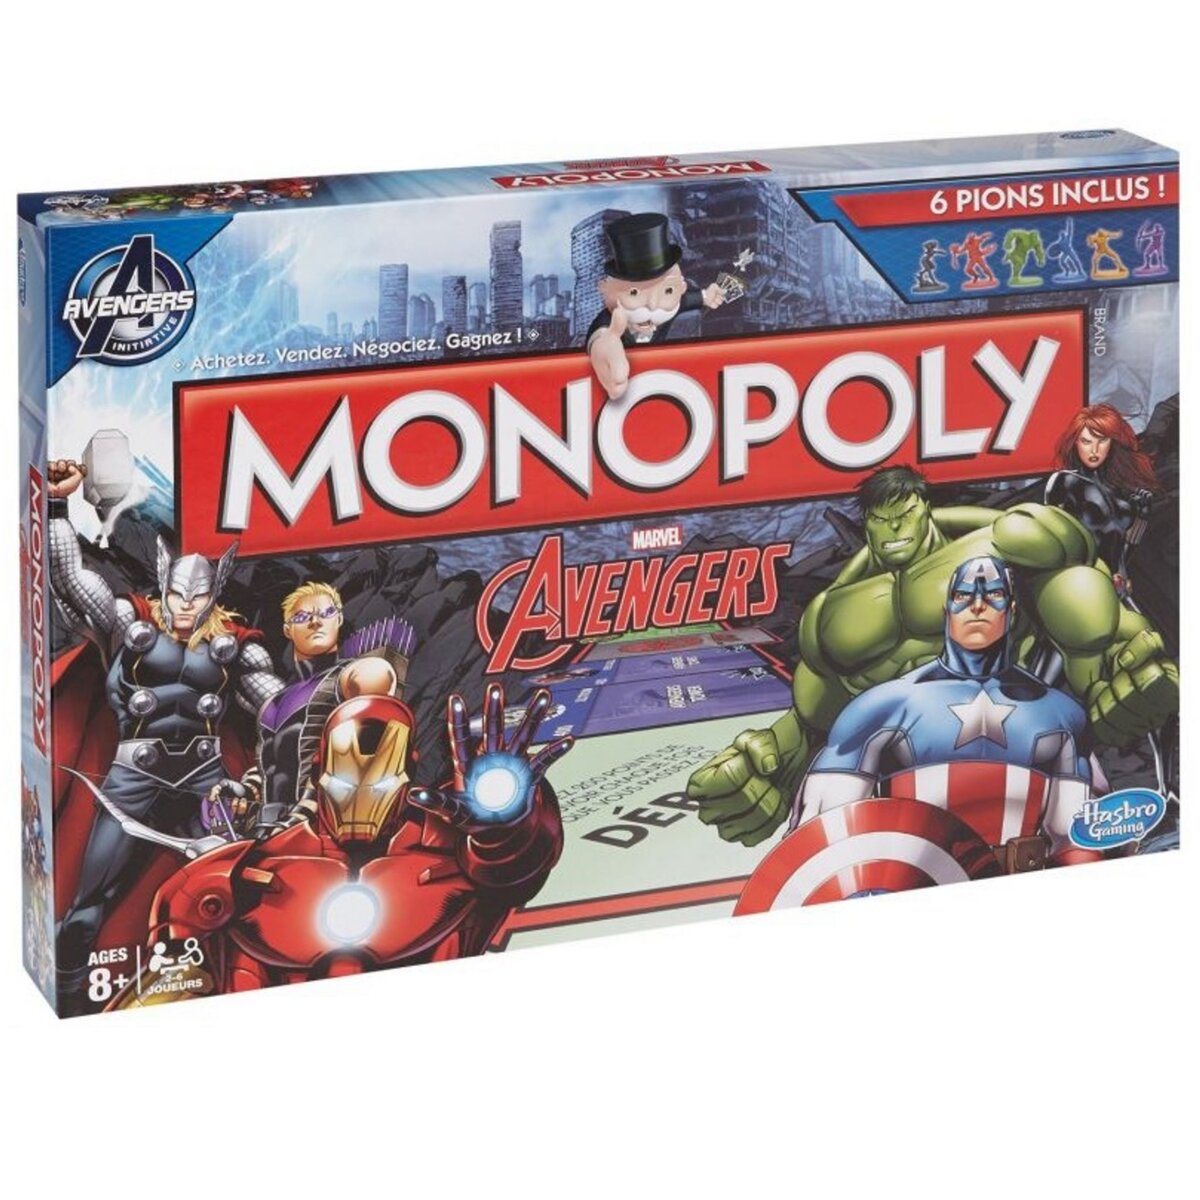 HASBRO Monopoly Avengers